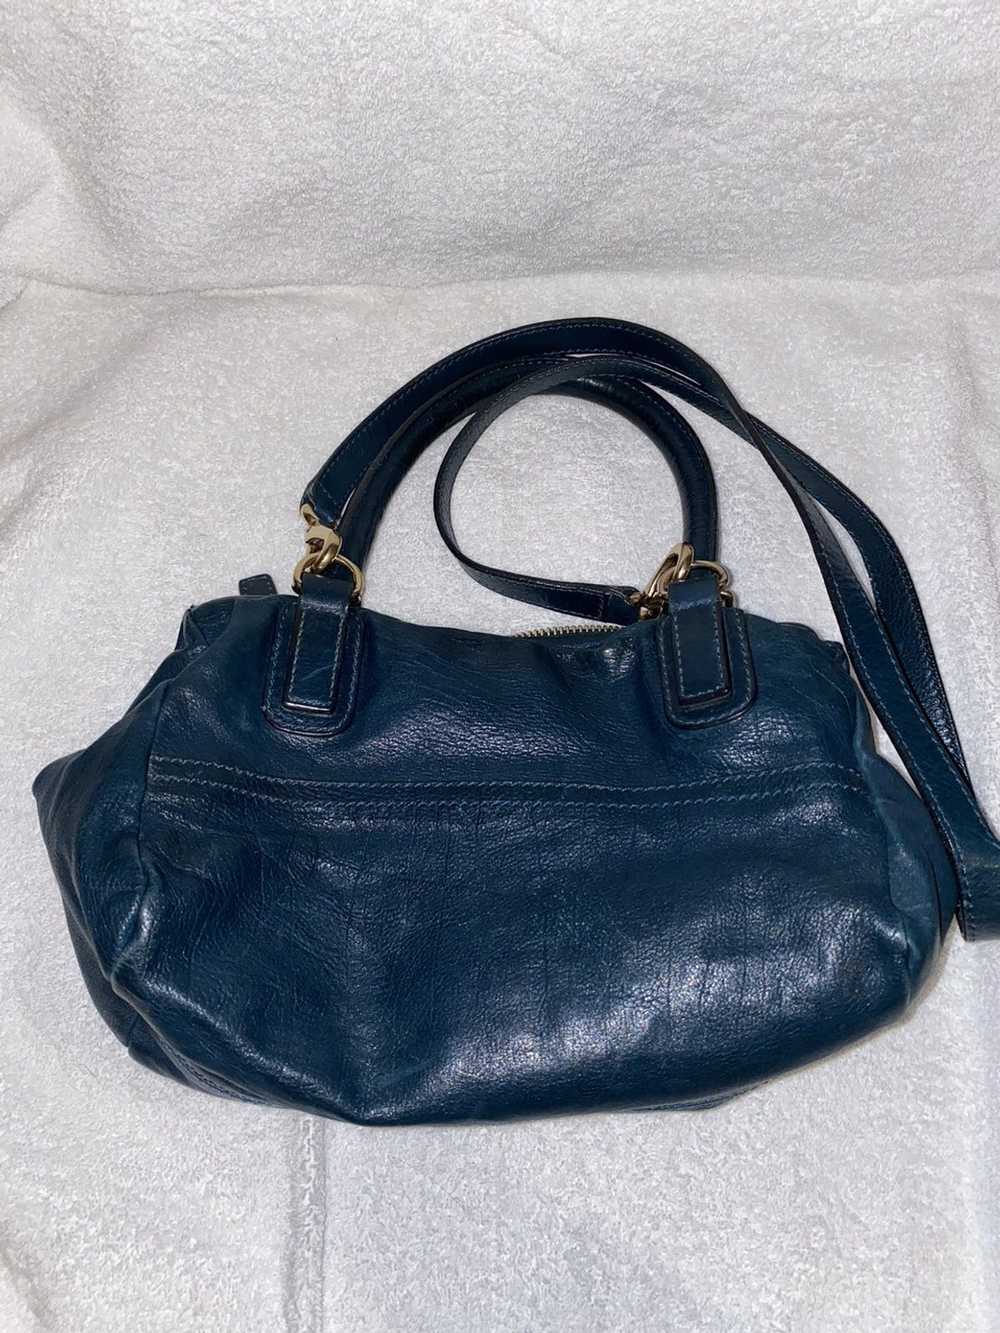 Givenchy Pandora Goatskin Bag - image 4